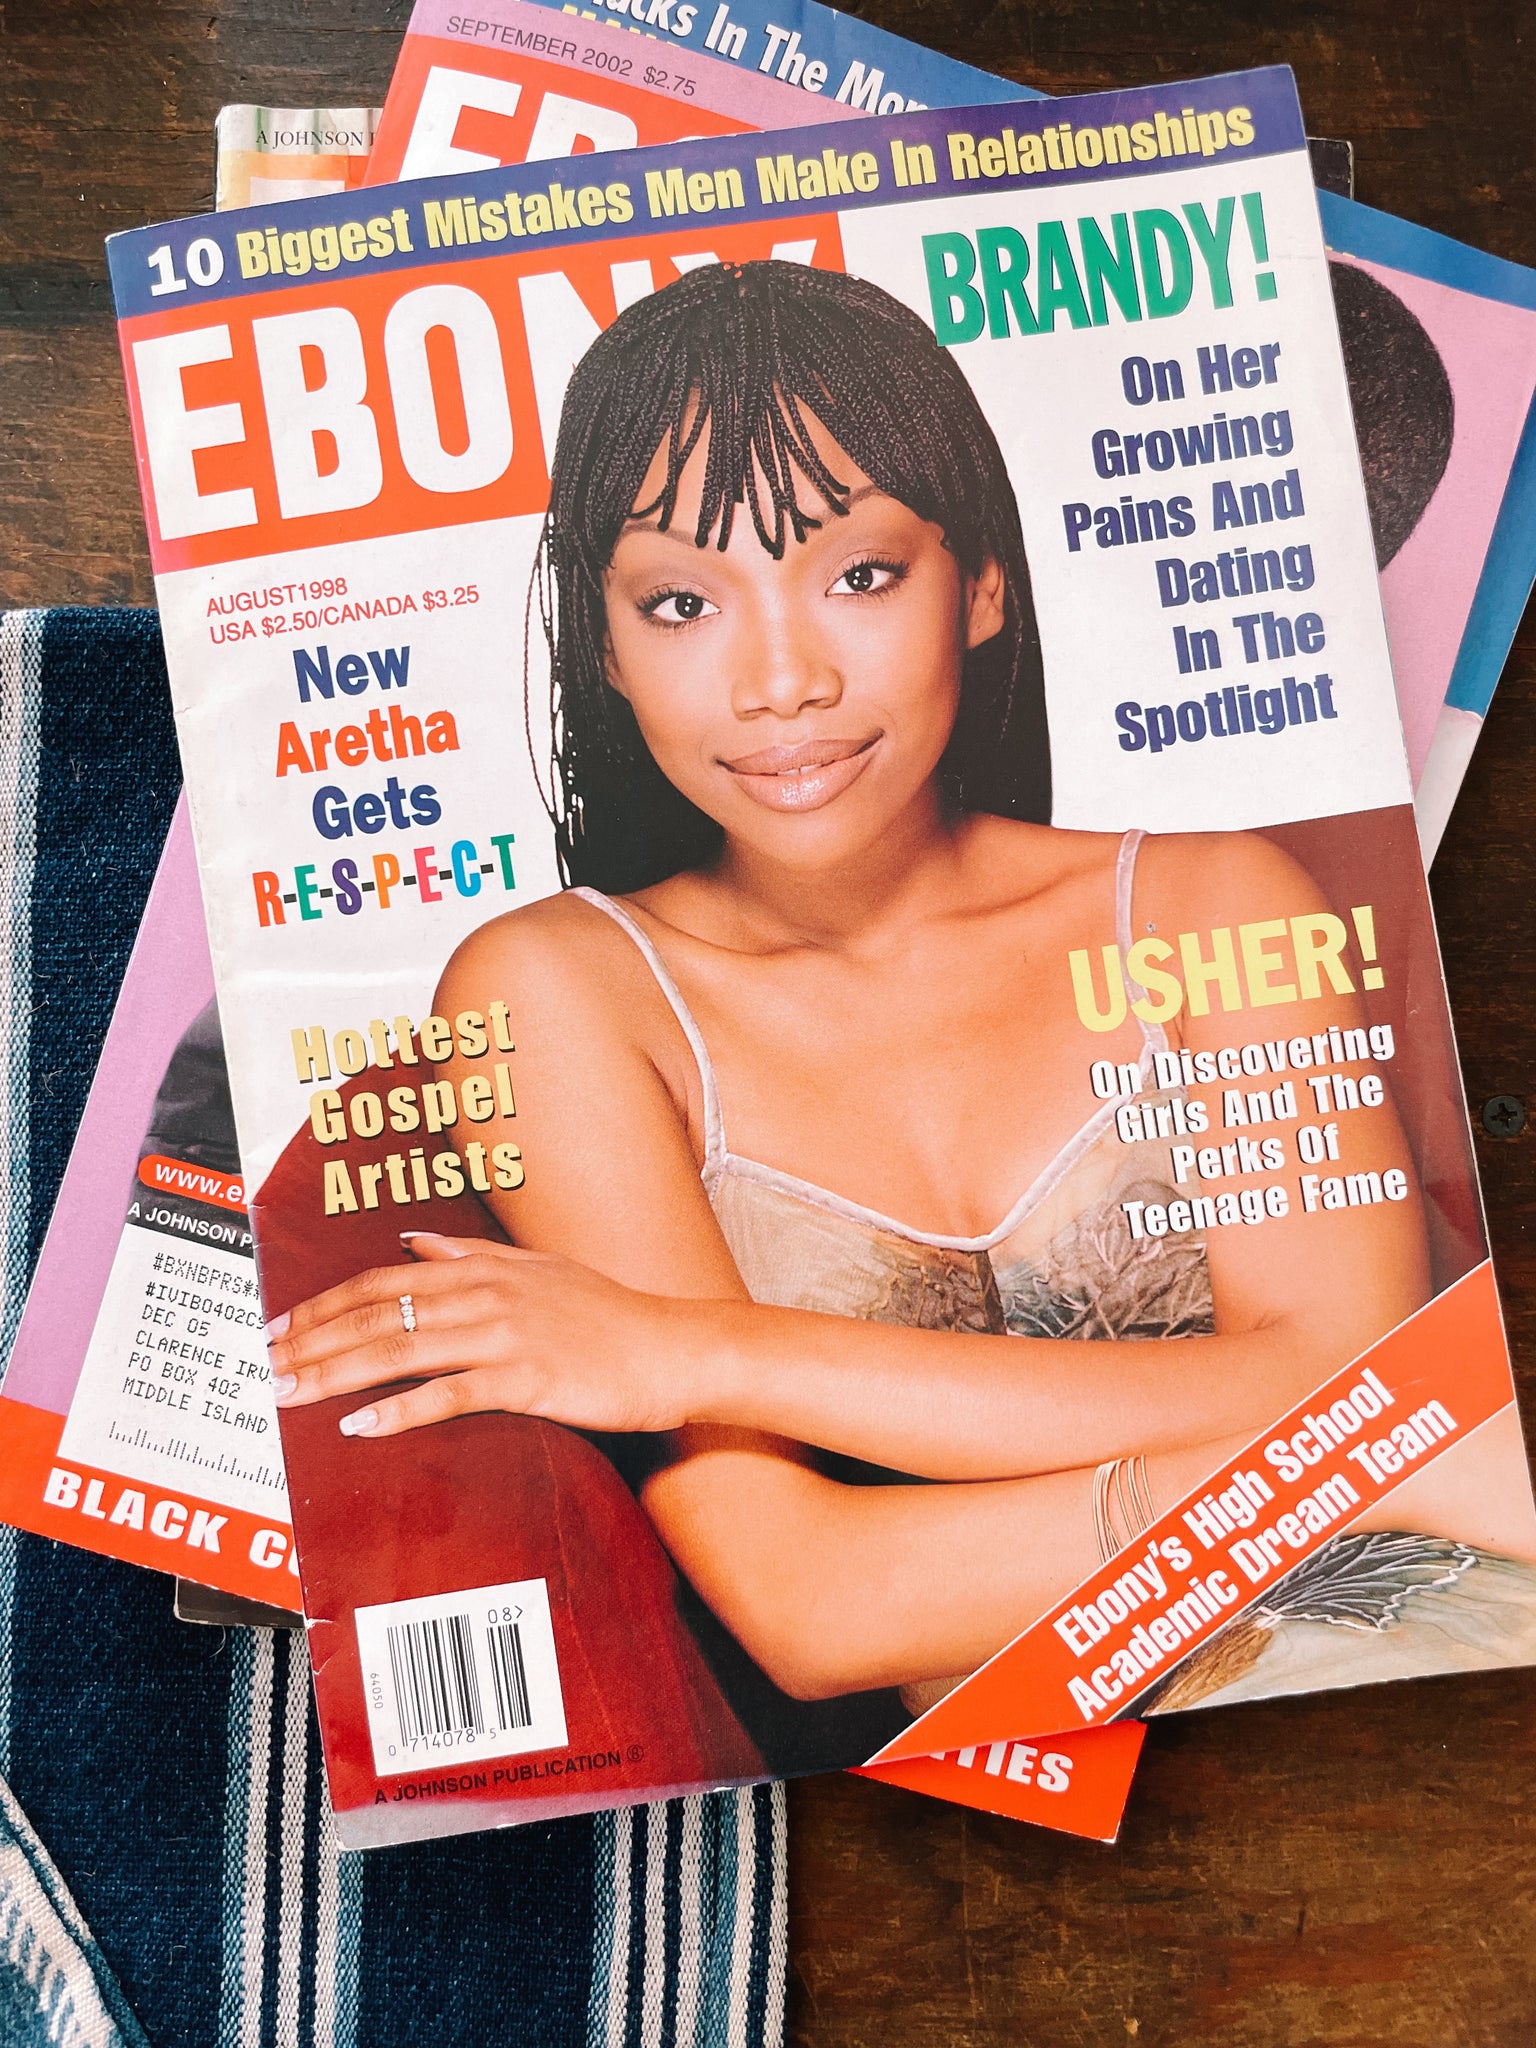 Vintage Assorted Ebony Magazines (Please Select)